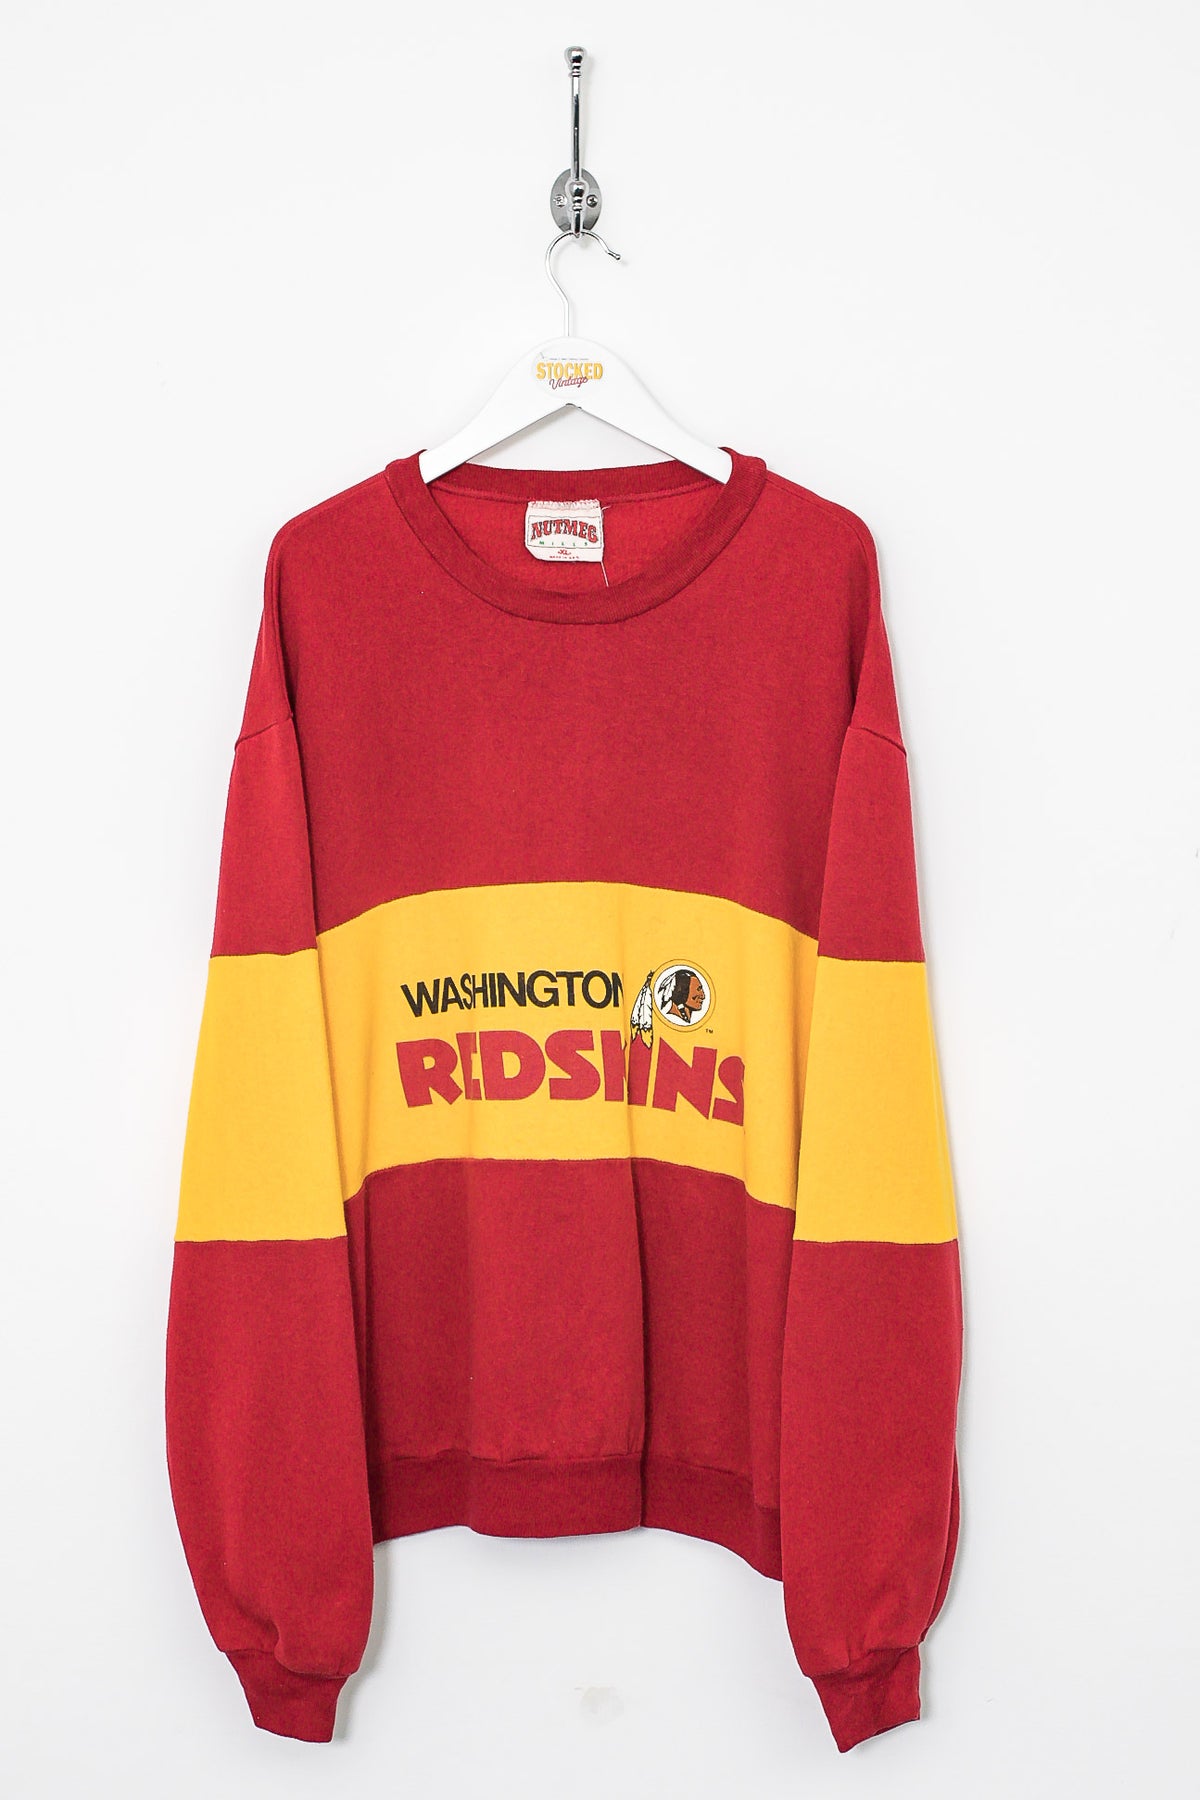 00s NFL Washington Redskins Sweatshirt (L)